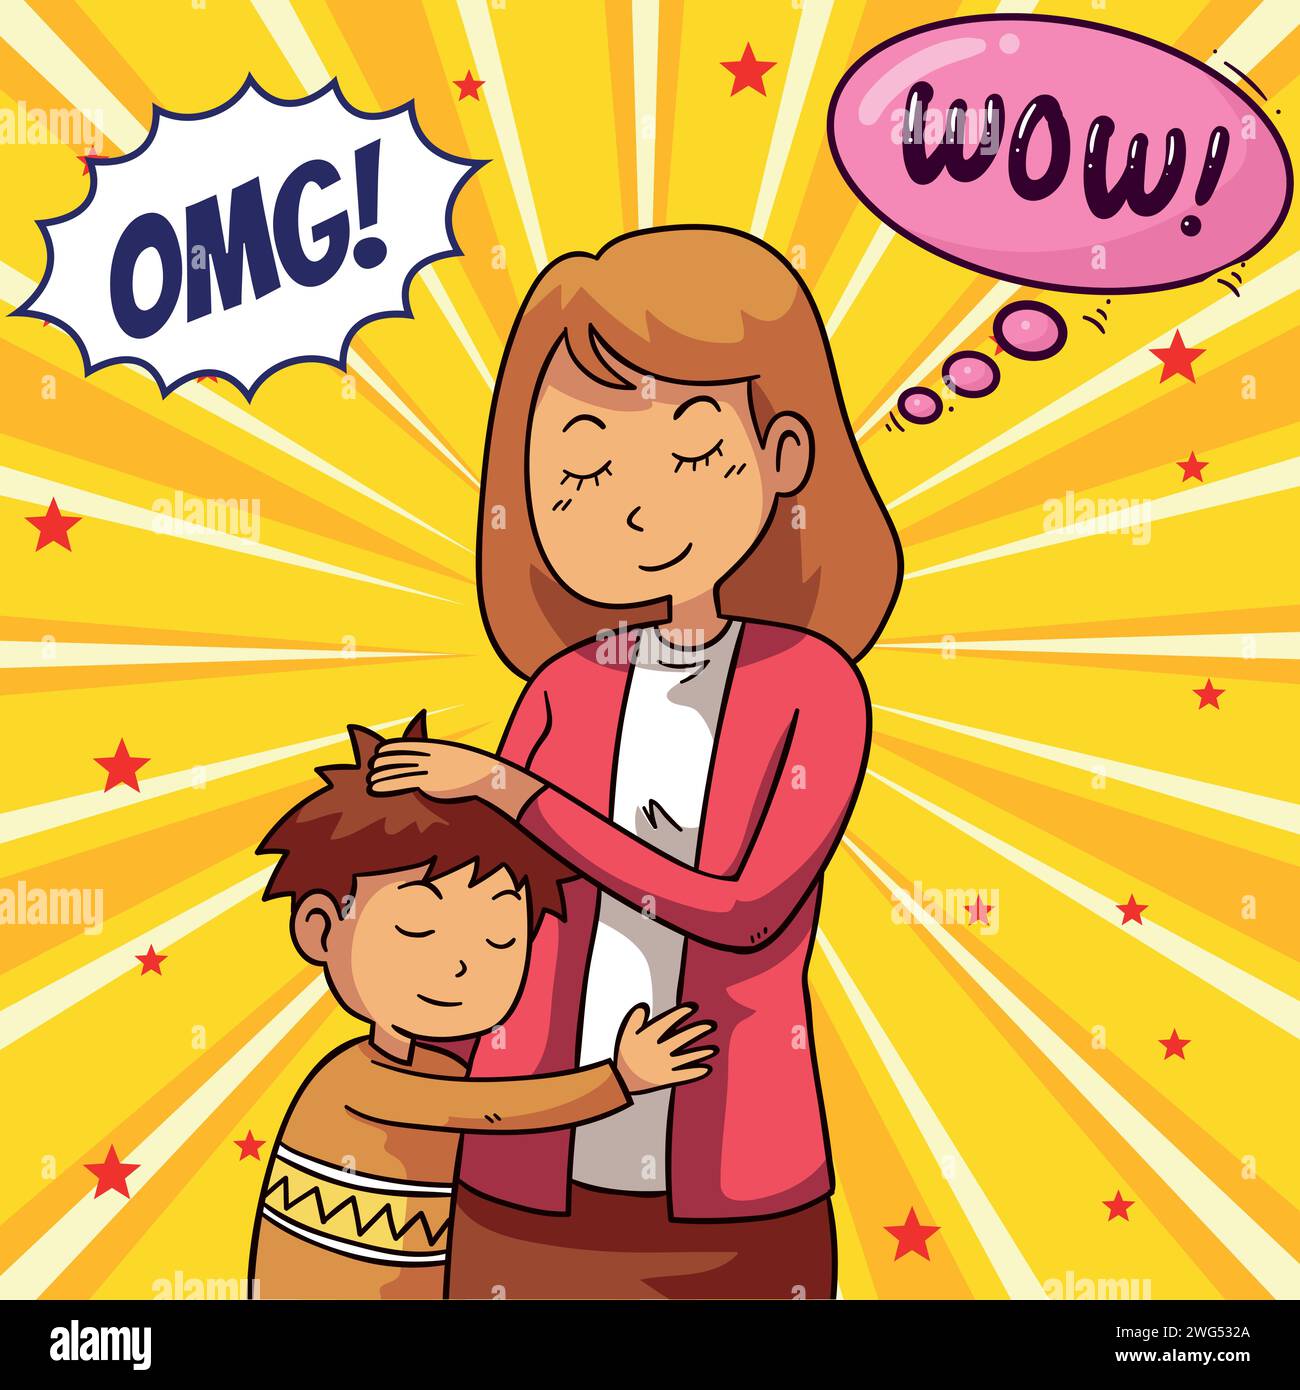 Super mom pop art style vector image Stock Vector